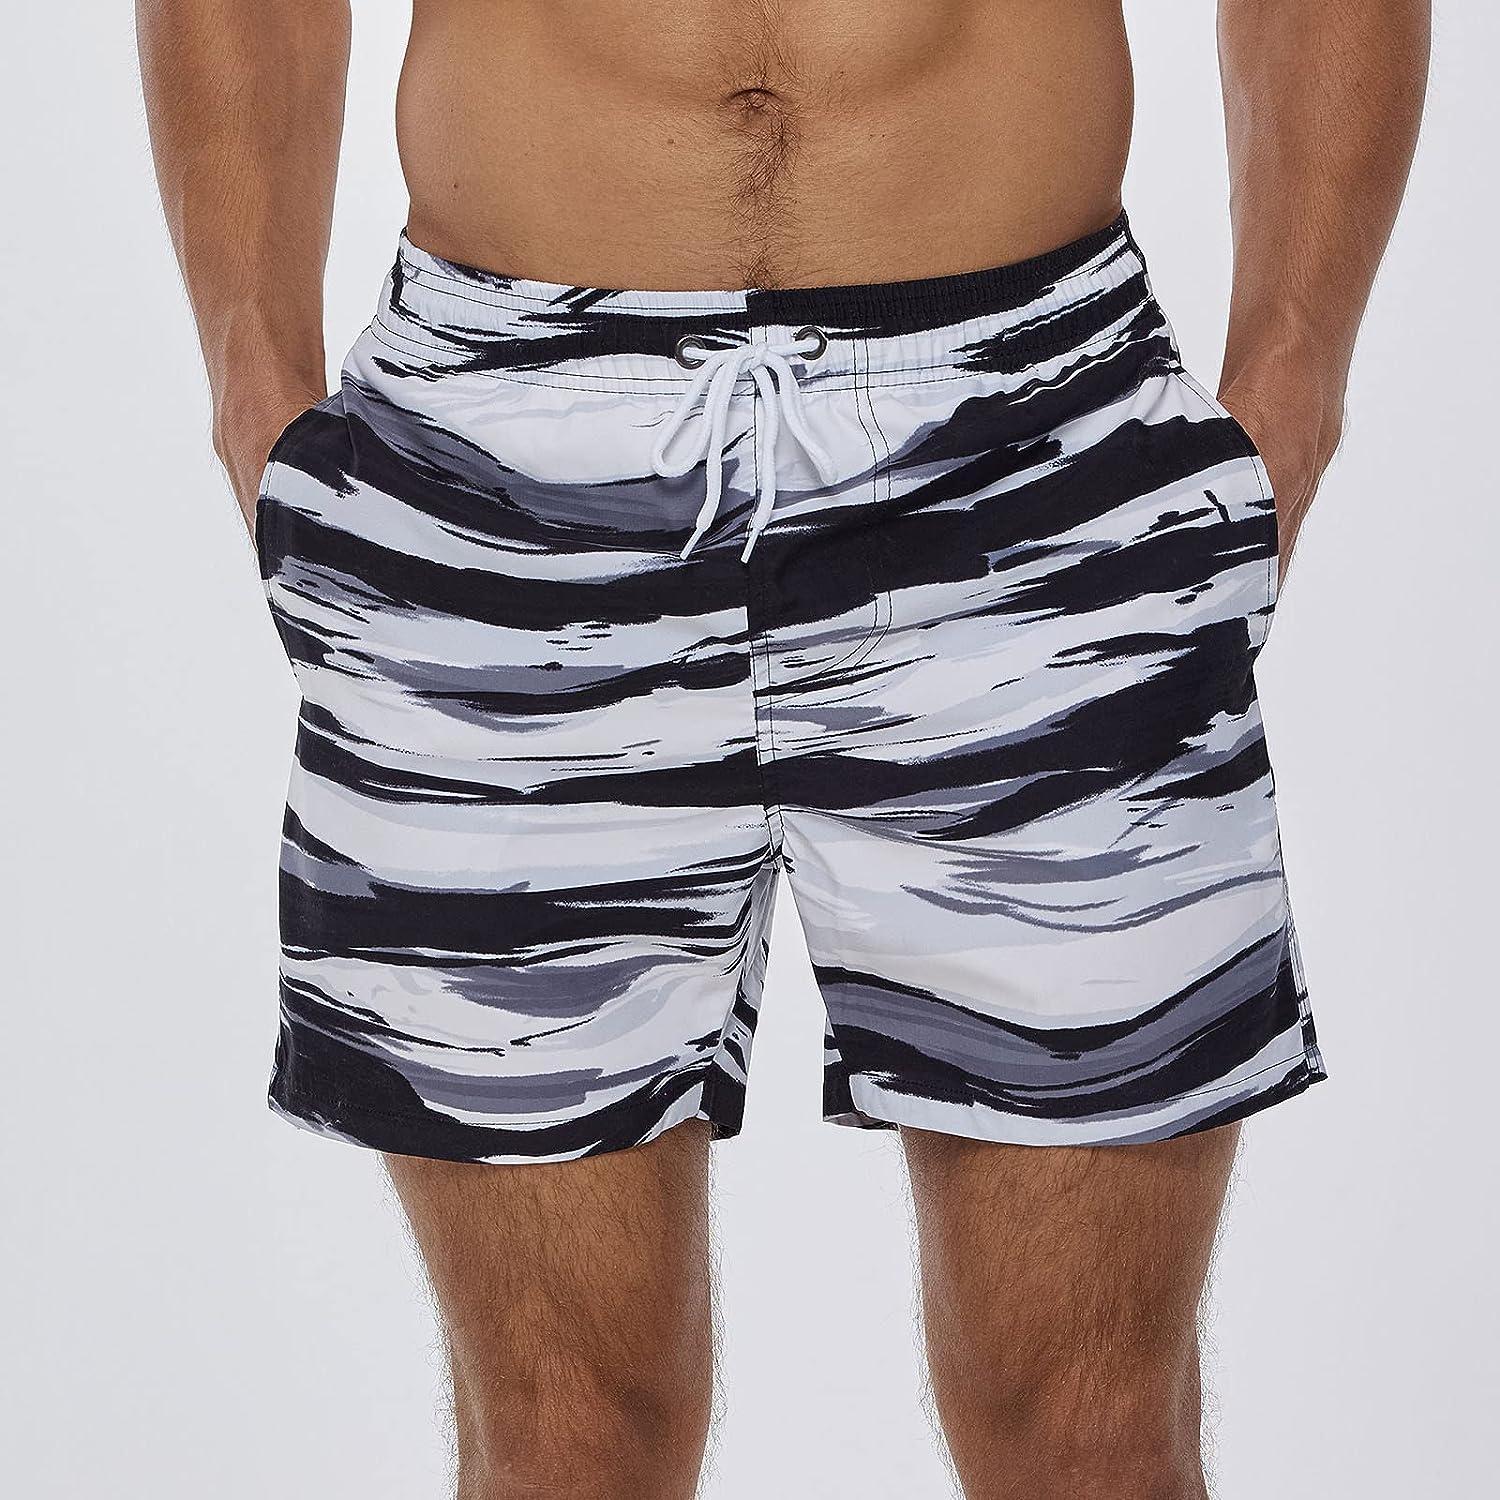 Mens Swim Trunks Quick Dry Swim Shorts with Mesh Lining Funny Swimwear  Bathing Suits Plus Size.S-5XL White Medium